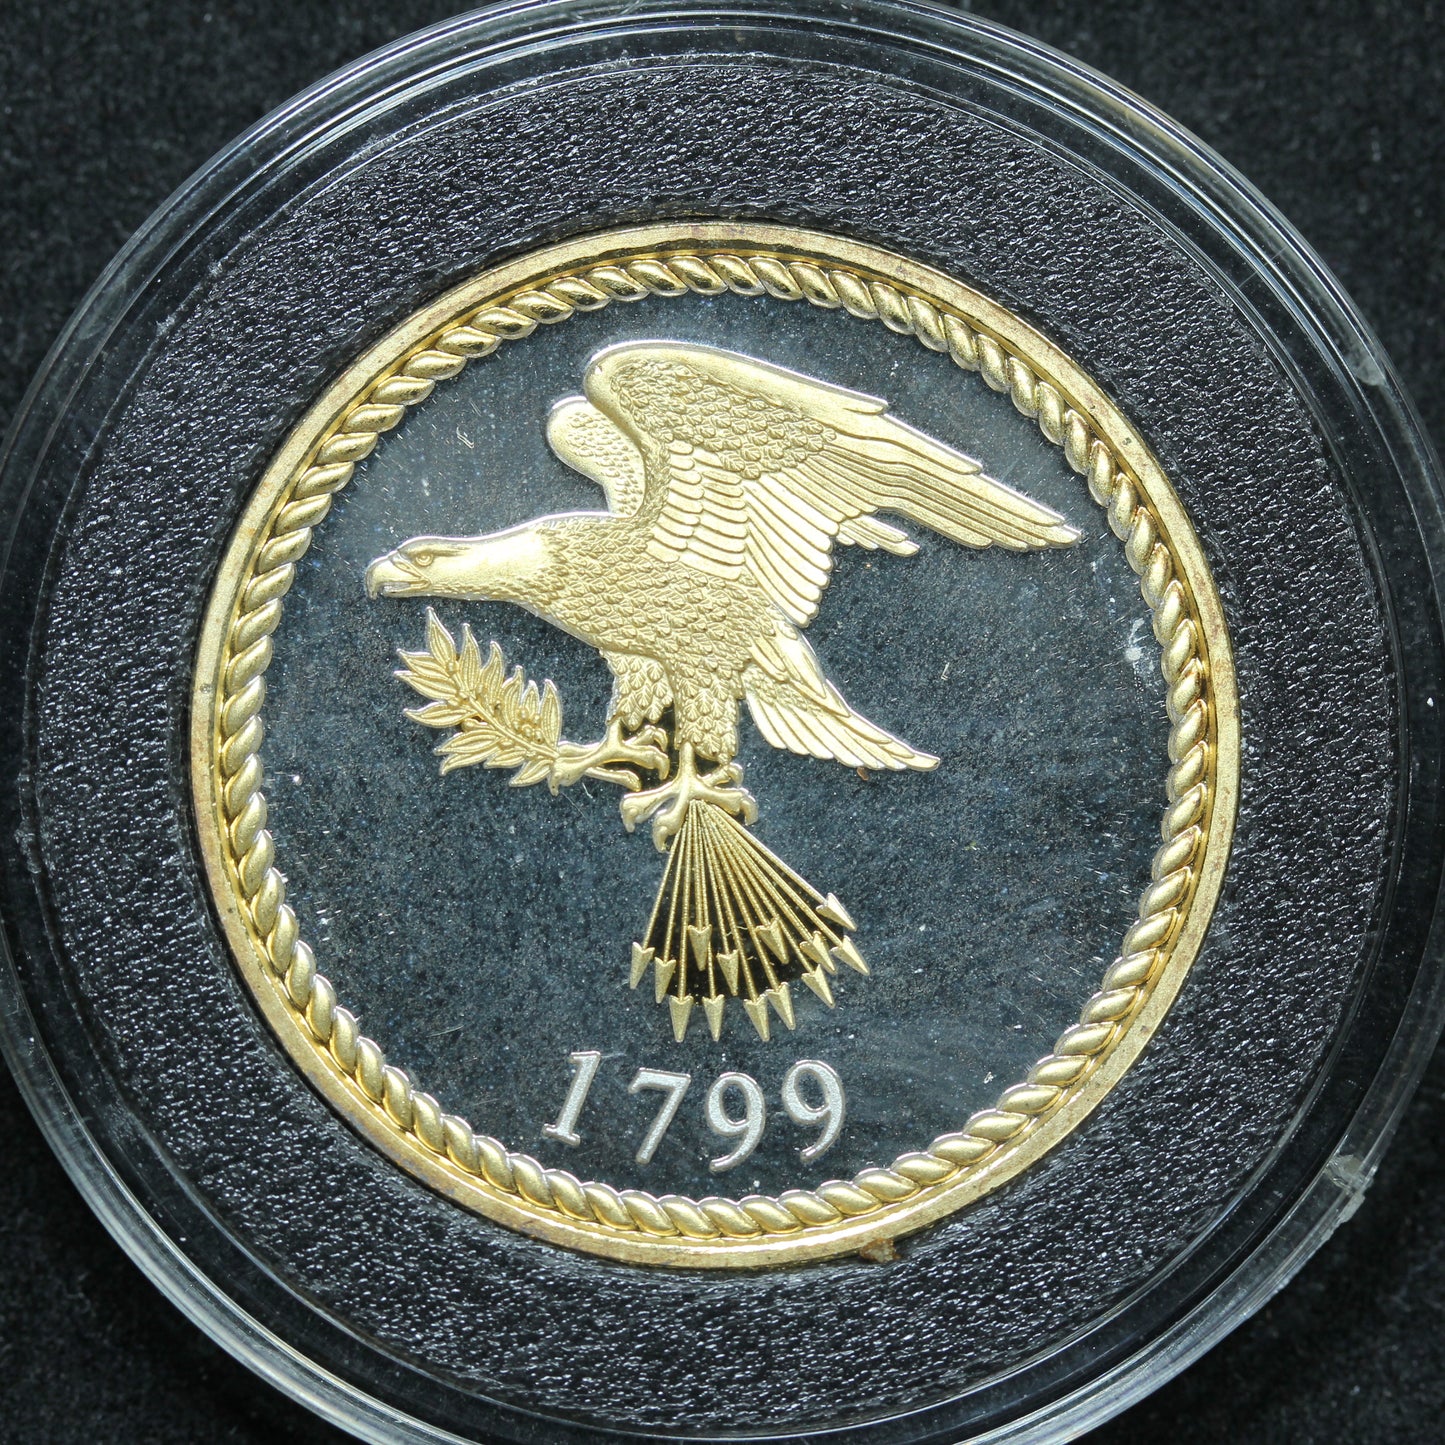 1799 North Carolina Gold Rush Commemorative - 1/2 oz .999 Silver w/ 24 Karat Gold